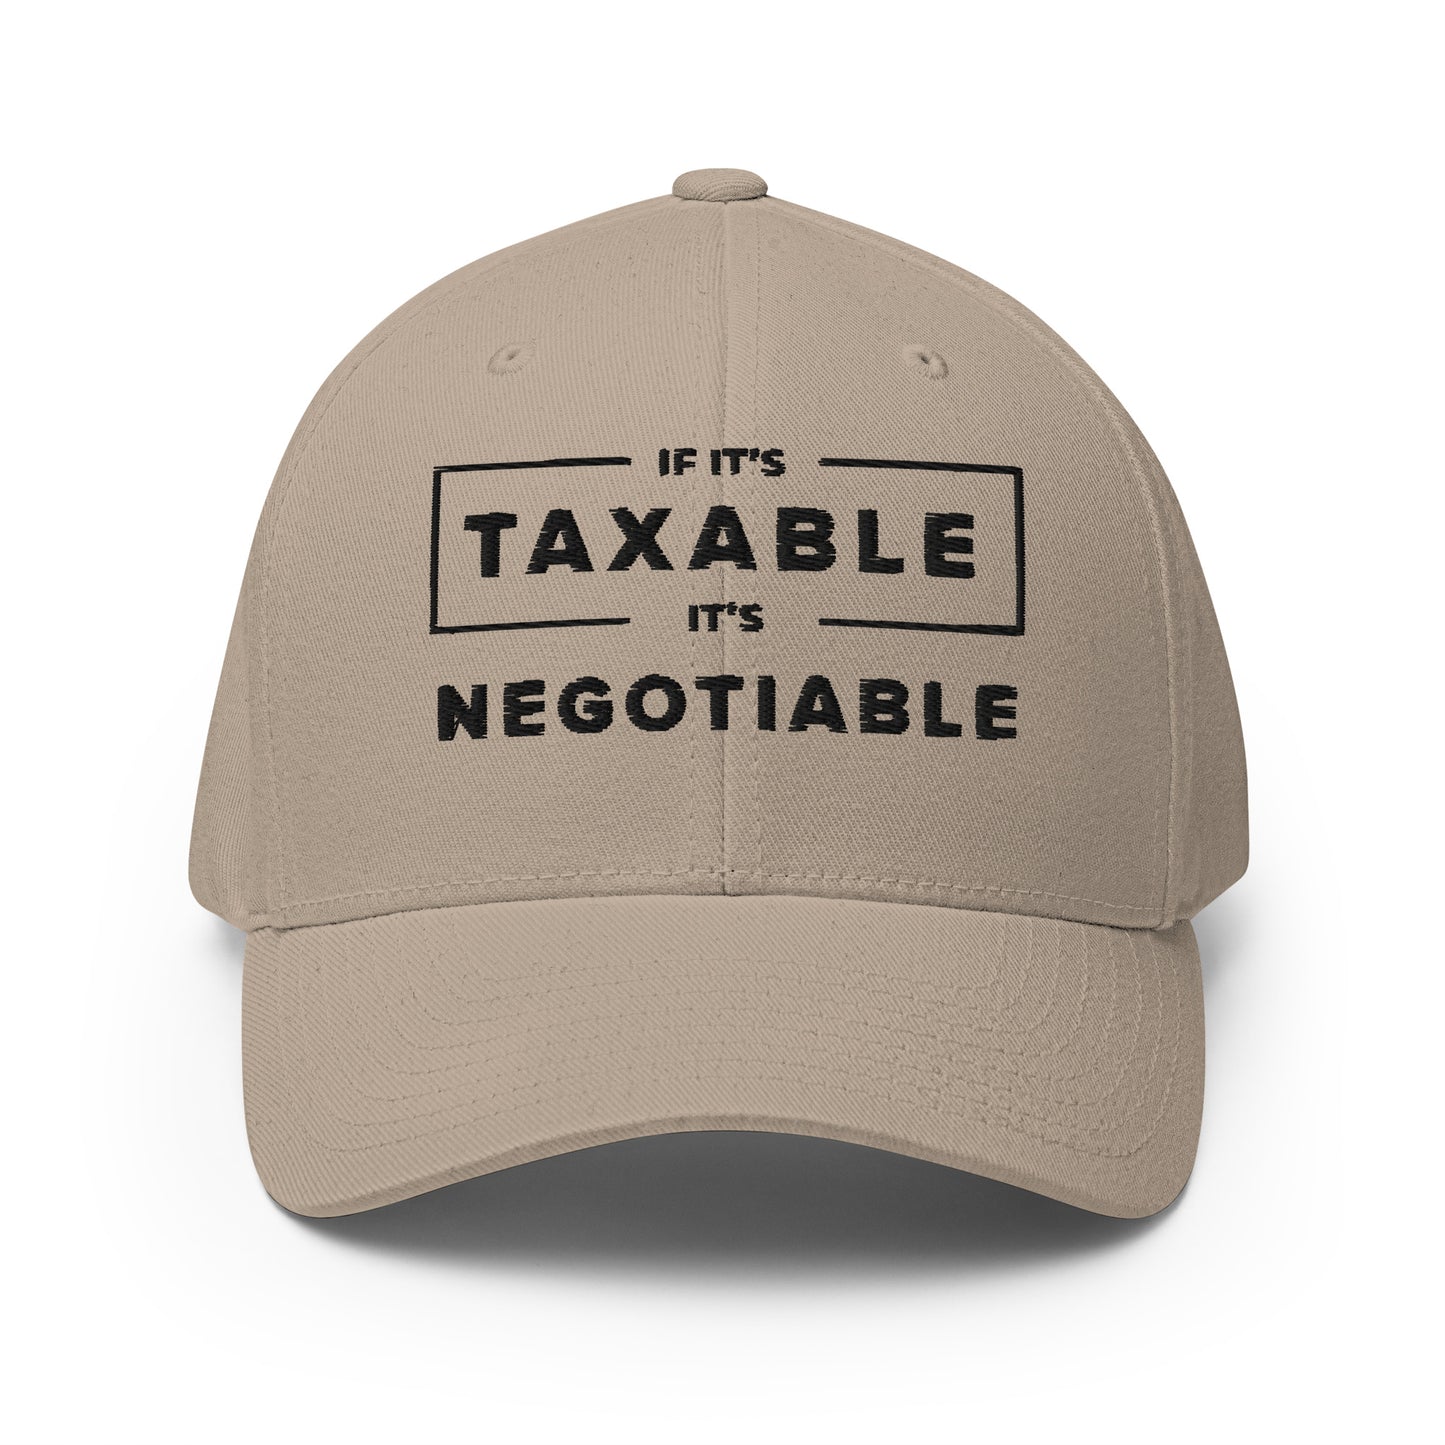 If it's taxable, it's negotiable hat - original - dark